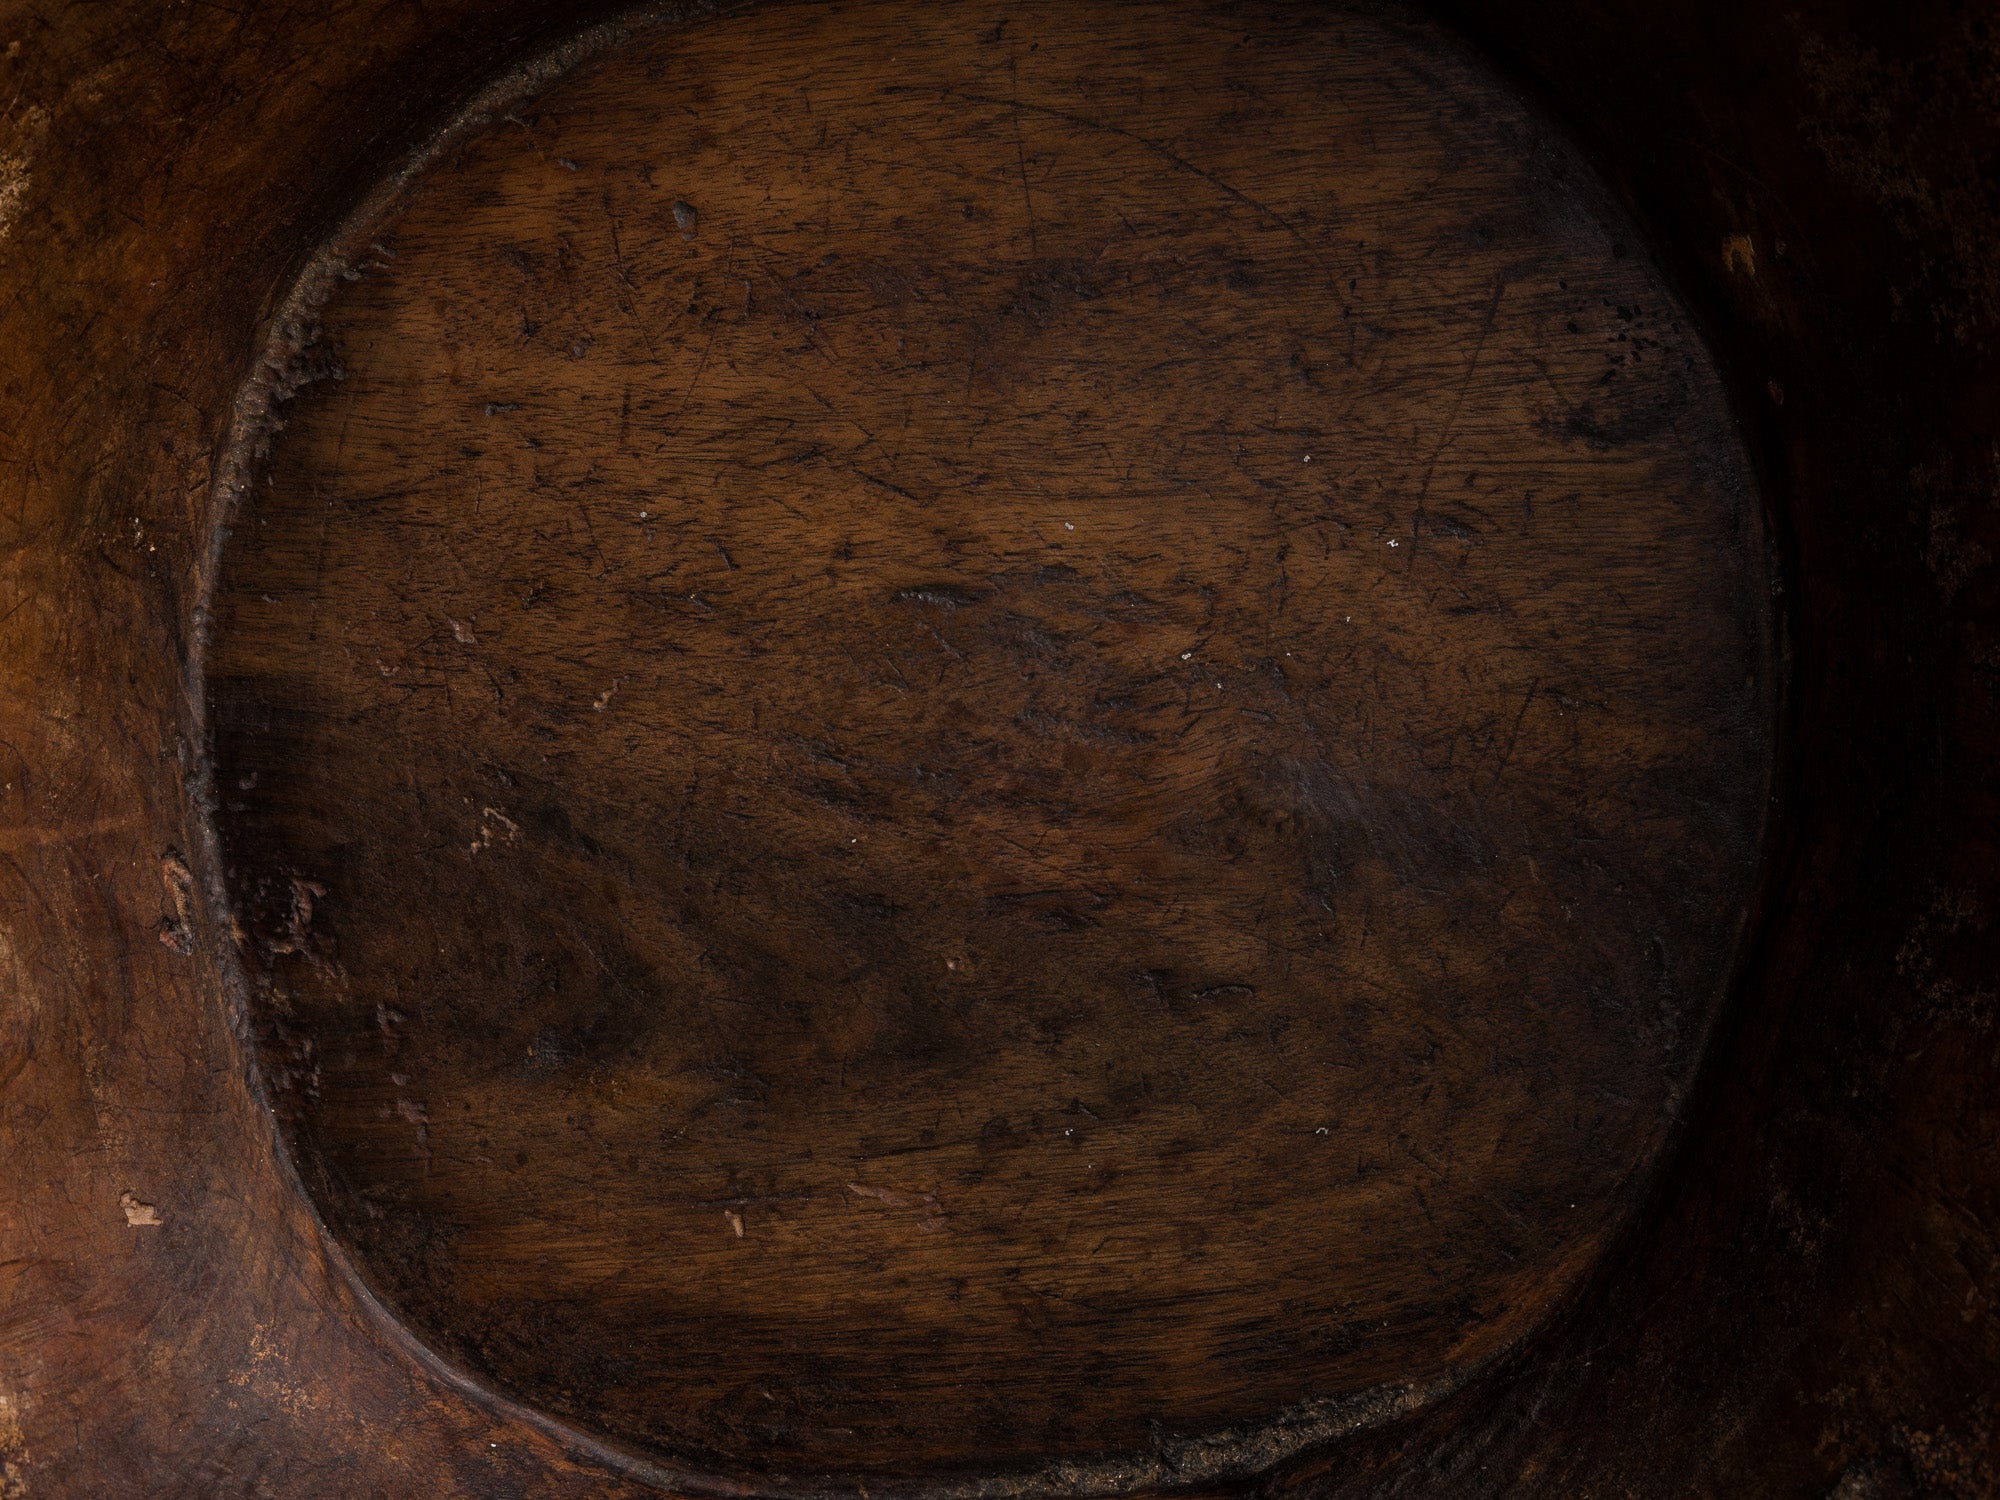 Coupe monoxyle auvergnate en noyer, art paysan, France (XIXe siècle)..circular carved Auvergne walnut wooden bowl, Peasant art, France (19th century)